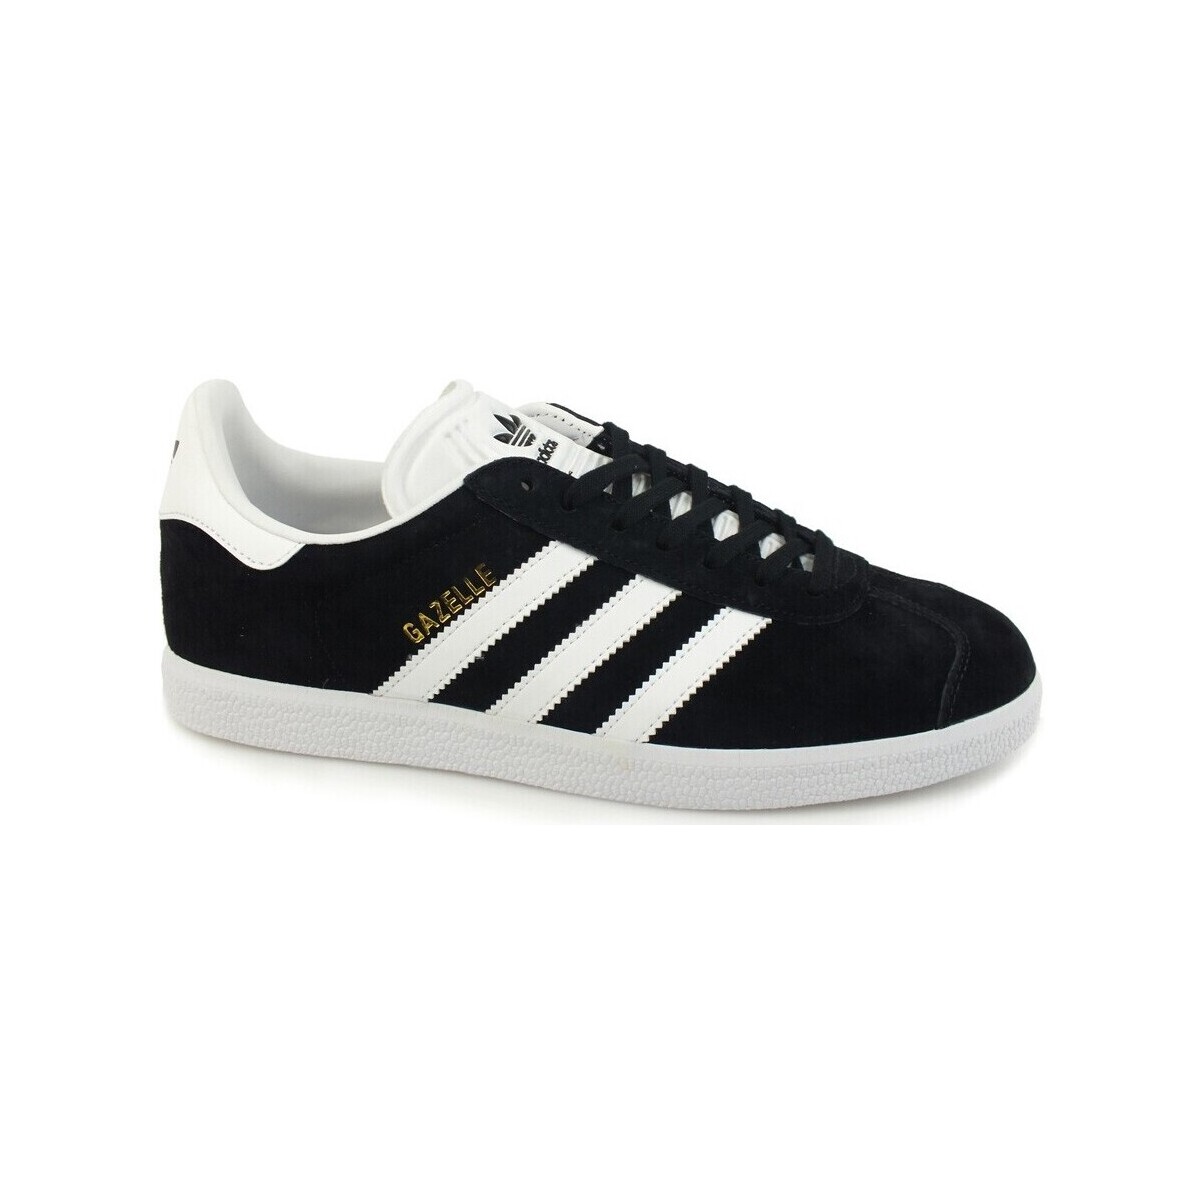 Chaussures de sport xr1 adidas Originals Gazelle Black White BB5476 26778307 1200 A